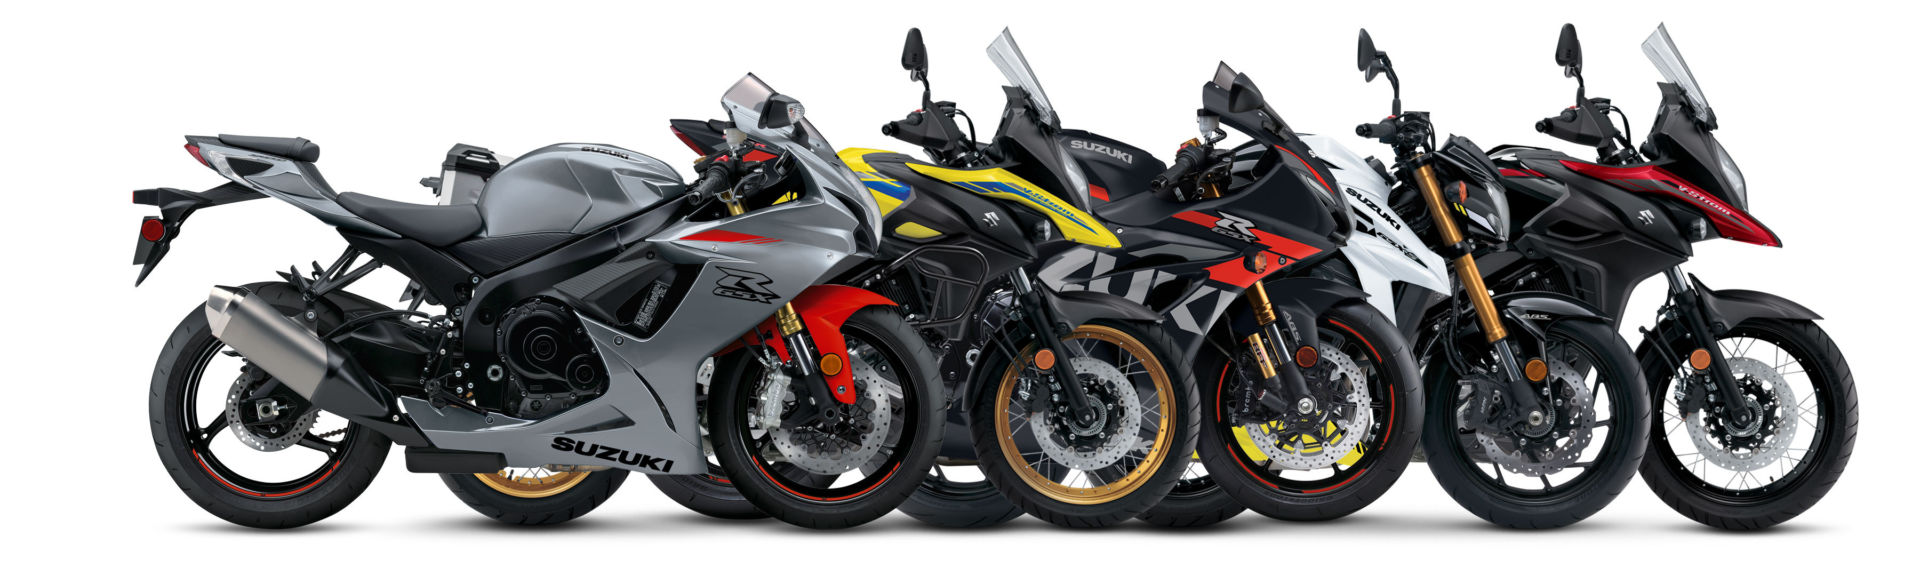 2021 model Suzuki motorcycles (from left): GSX-R750, V-Strom 650XT Adventure, GSX-R1000R, GSX-S750 ABS, and V-Strom 650XT. Photo courtesy Suzuki Motor of America, Inc.